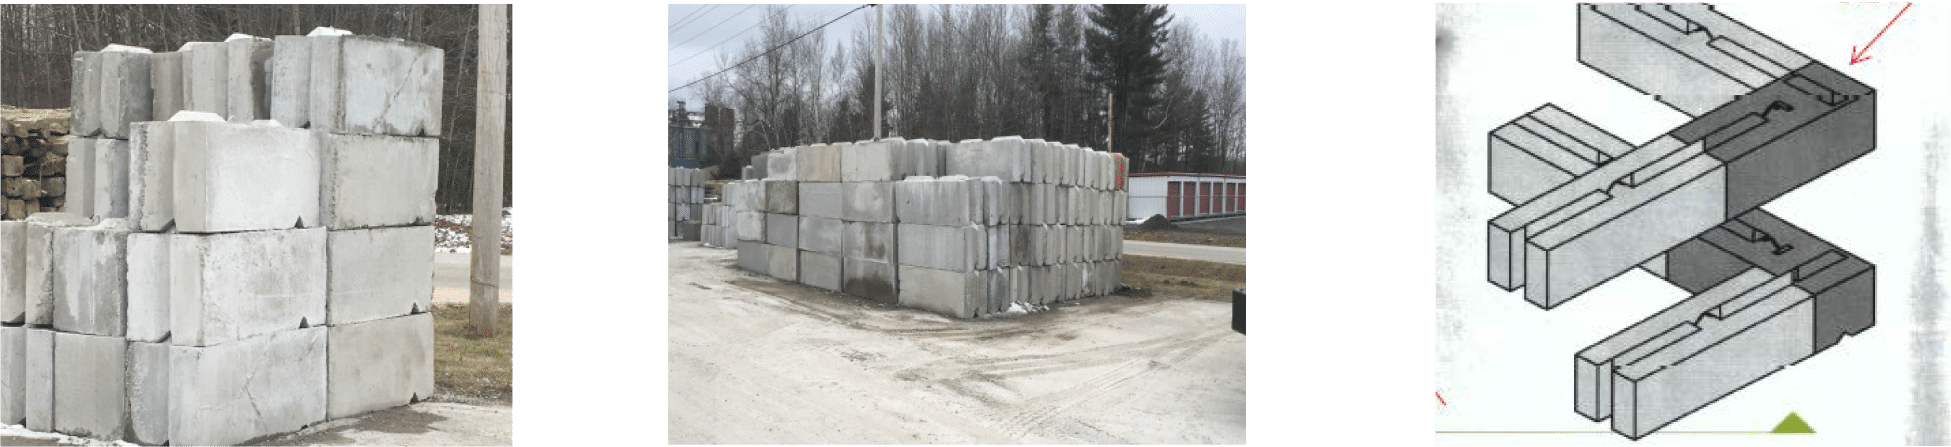 Recycled Concrete Blocks - Auburn Concrete, Maine’s leading provider of